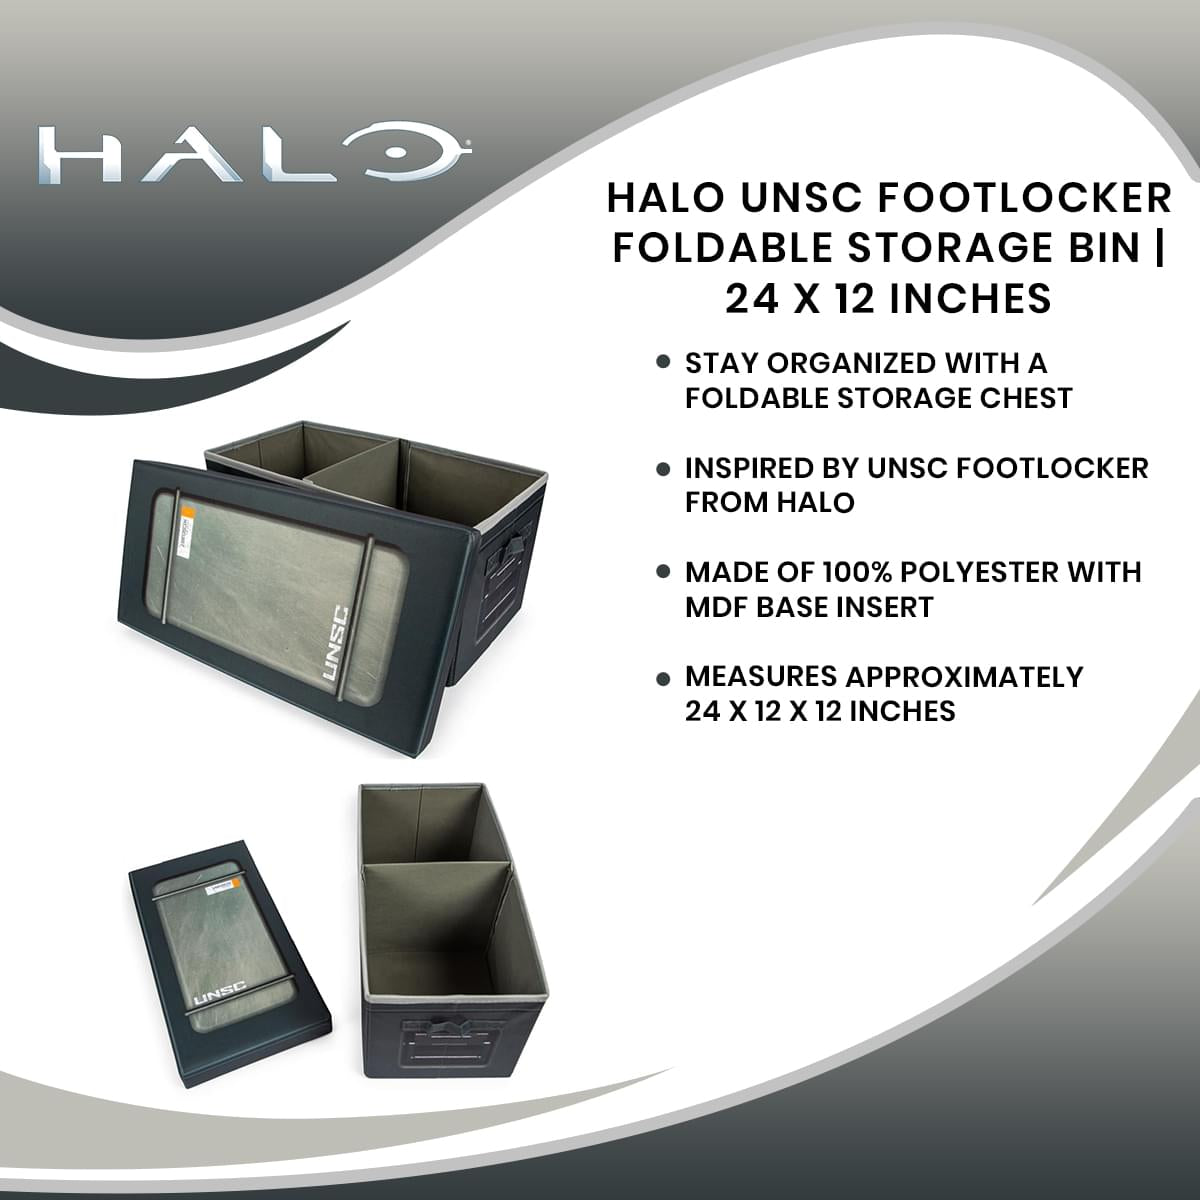 Halo UNSC Footlocker Foldable Storage Bin | 24 x 12 Inches